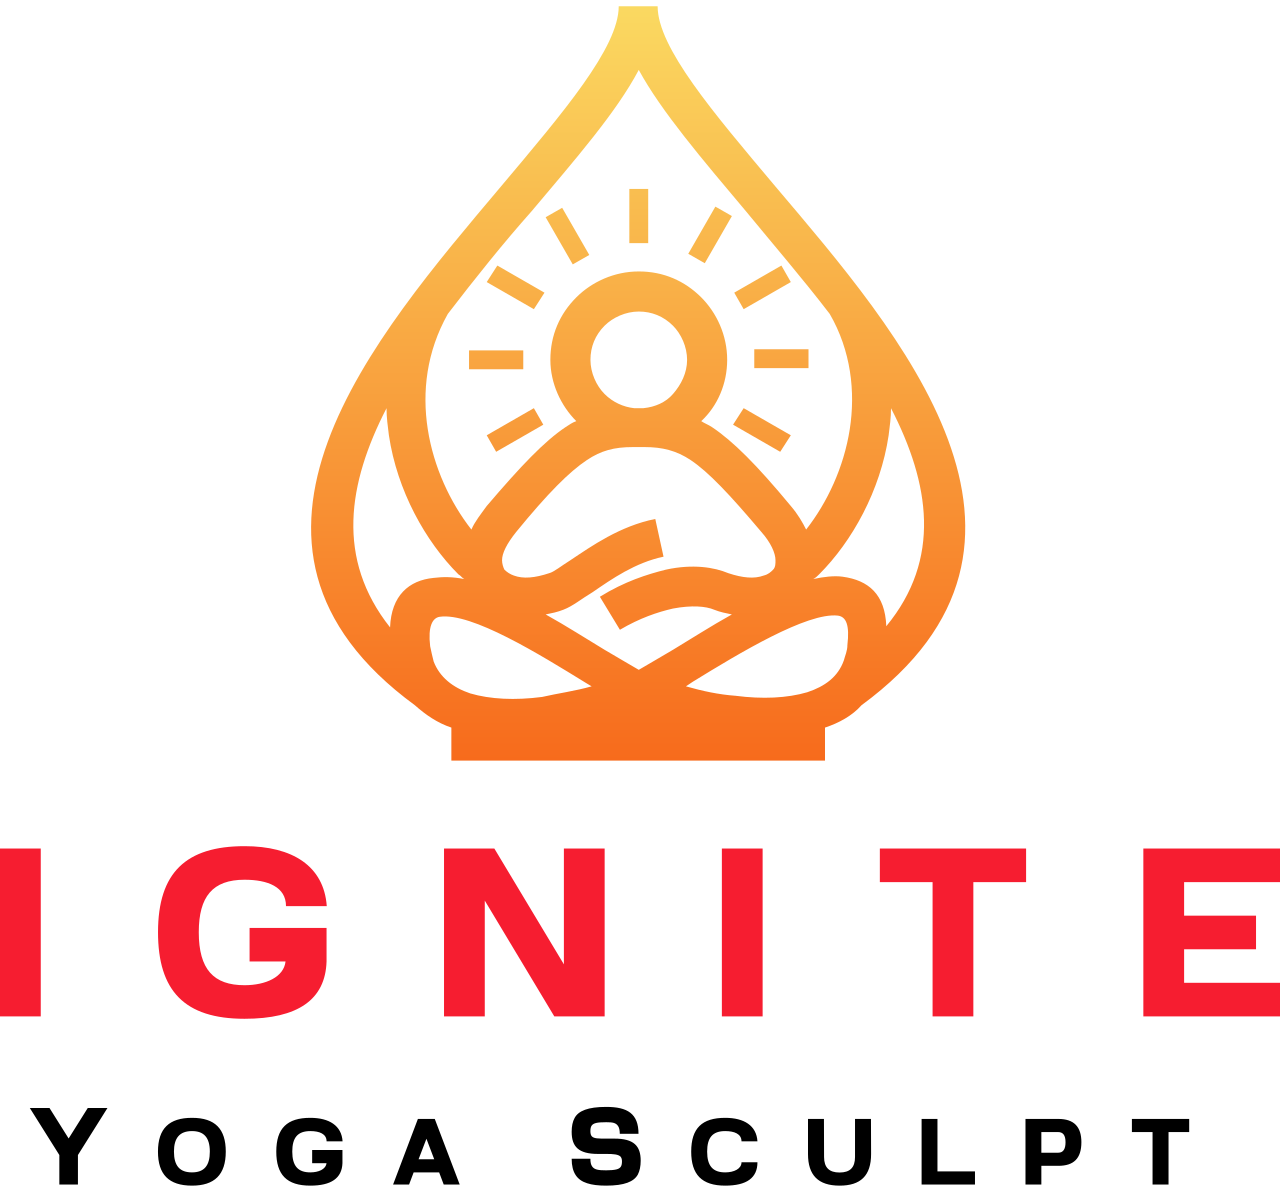  IGNITE 's logo